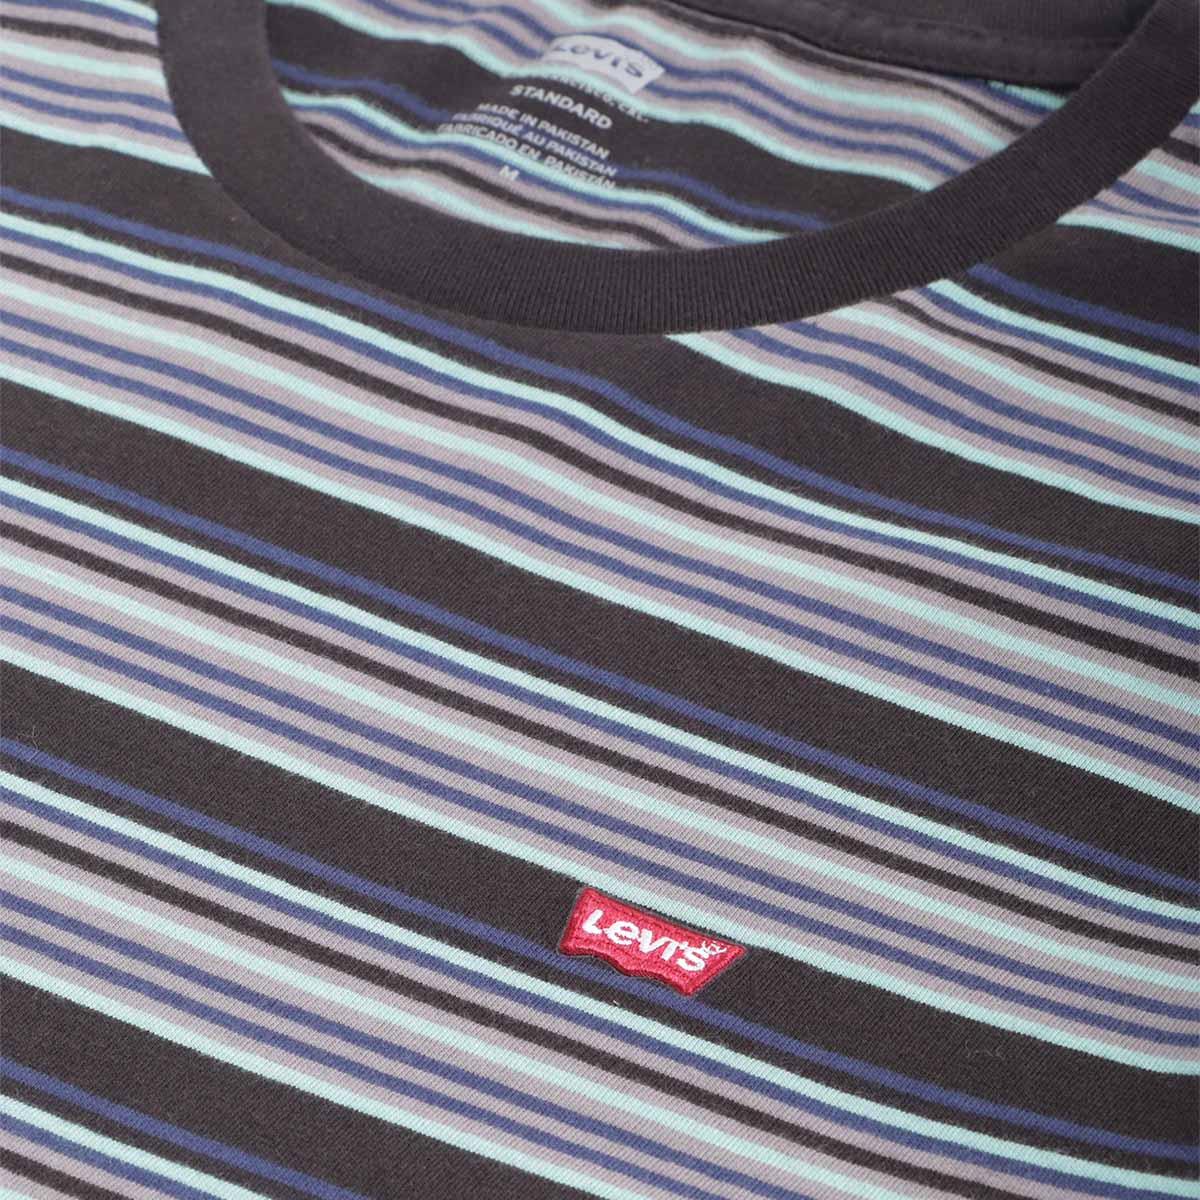 Levis Original Housemark T-Shirt, Rings Stripe Meteorite, Detail Shot 2